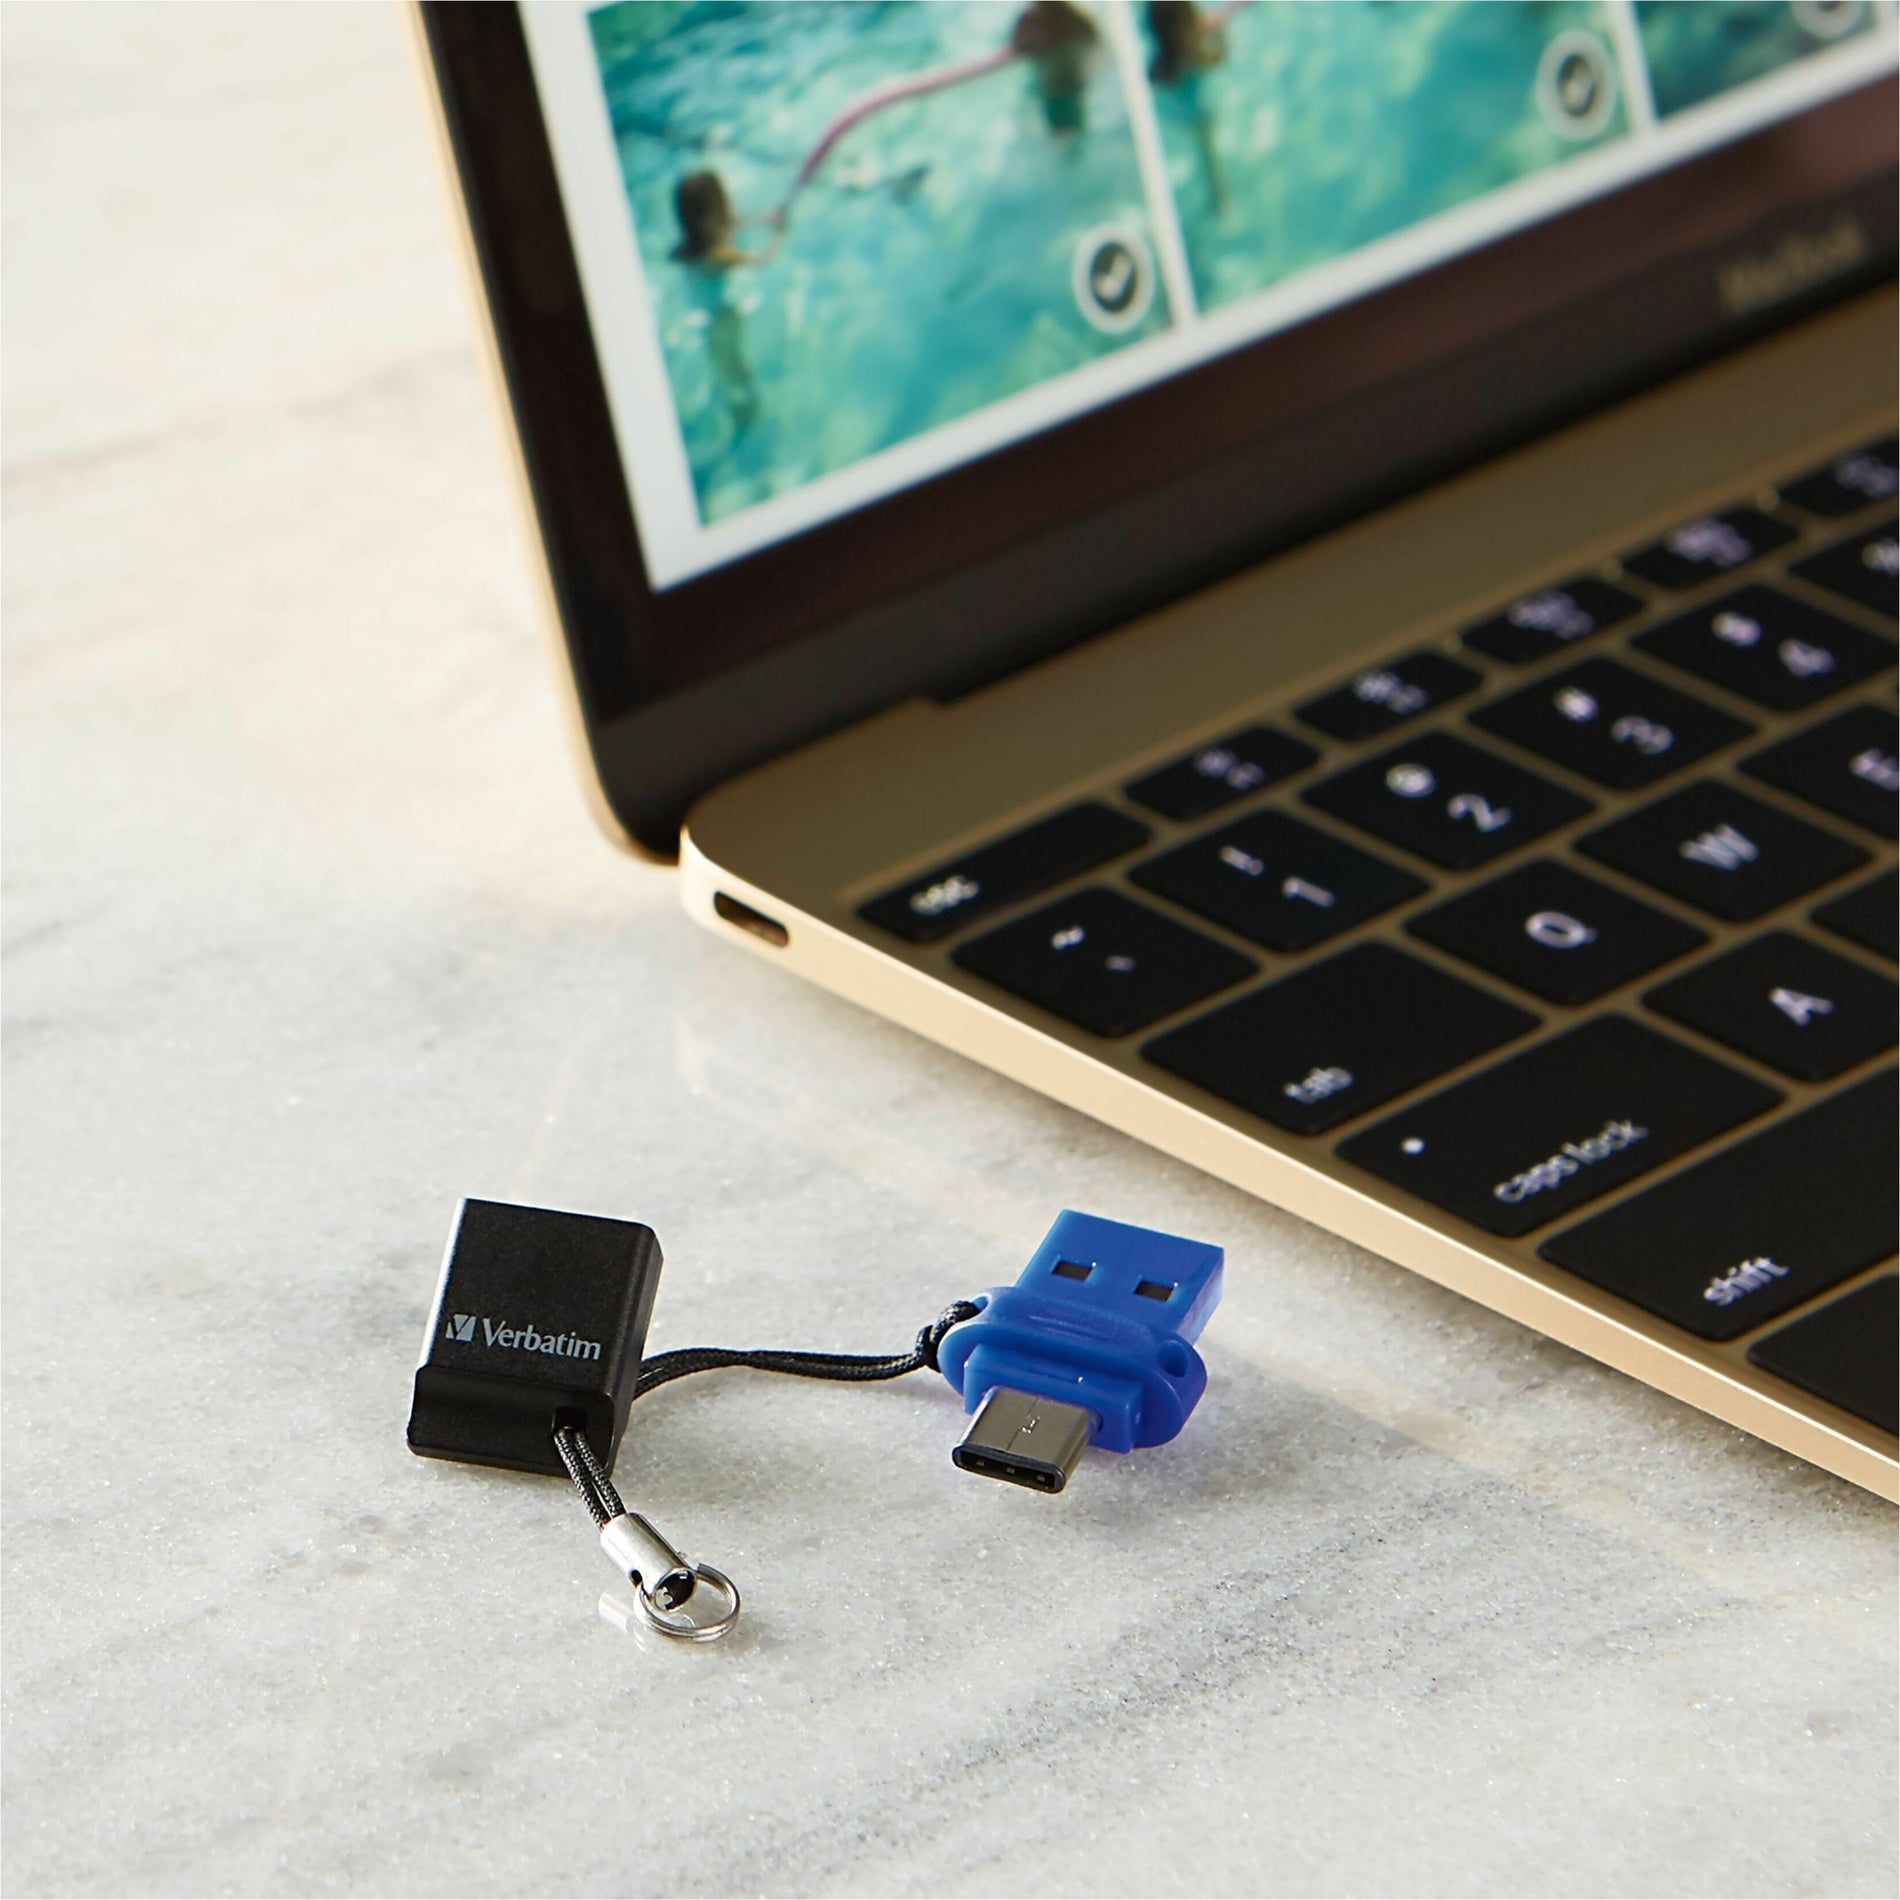 Verbatim 71275 Store 'n' Go Dual 128GB USB Flash Drive, Blue